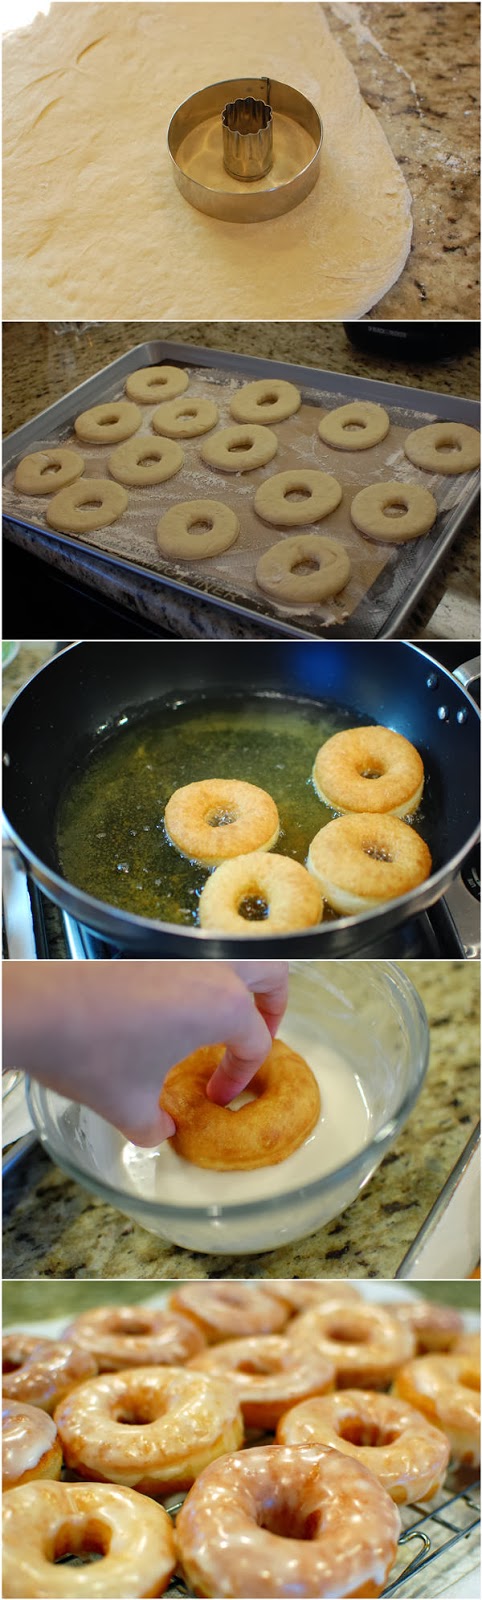 Homemade Glazed Krispy Kreme Donuts | 25+ CopyCat Restaurant Recipes